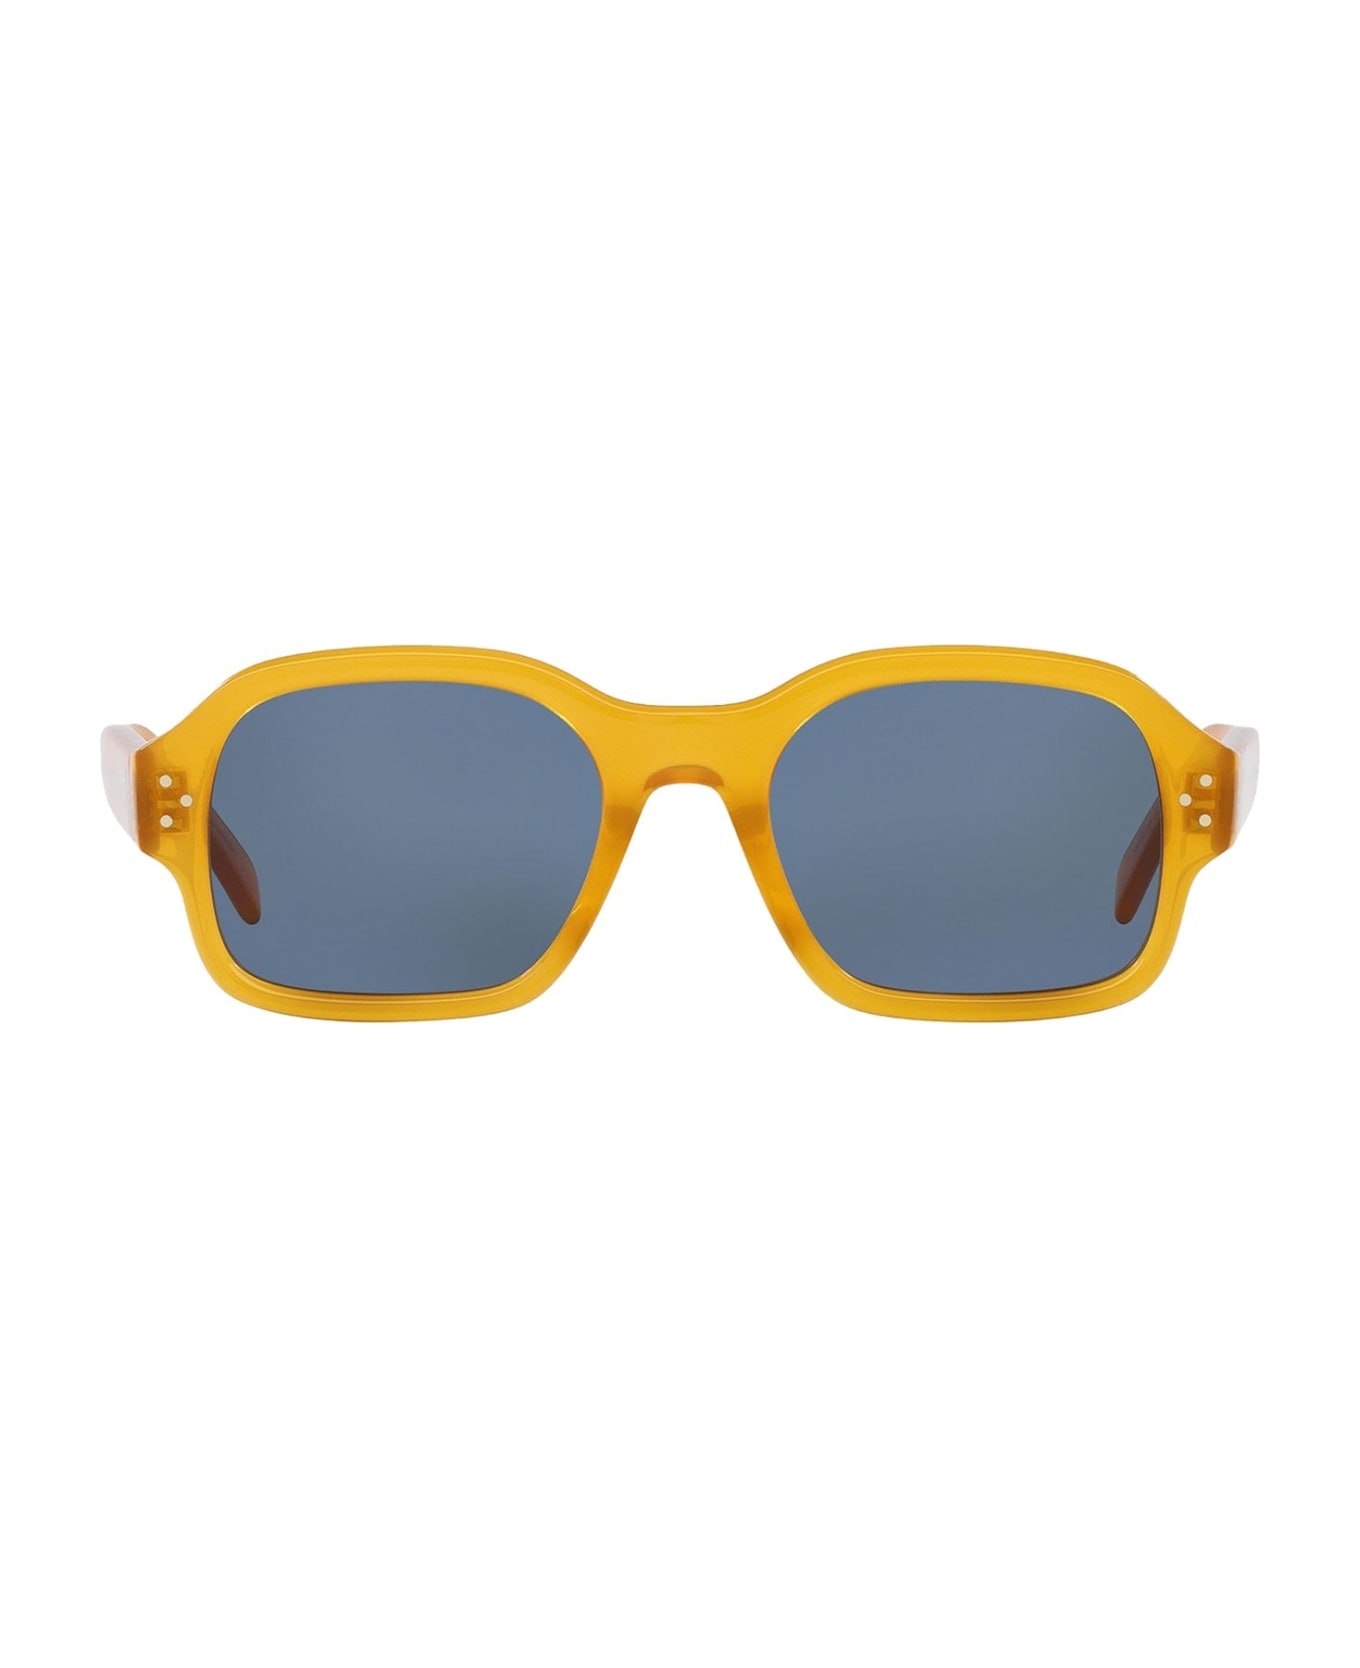 Celine Frame 49 Sunglasses - Yellow